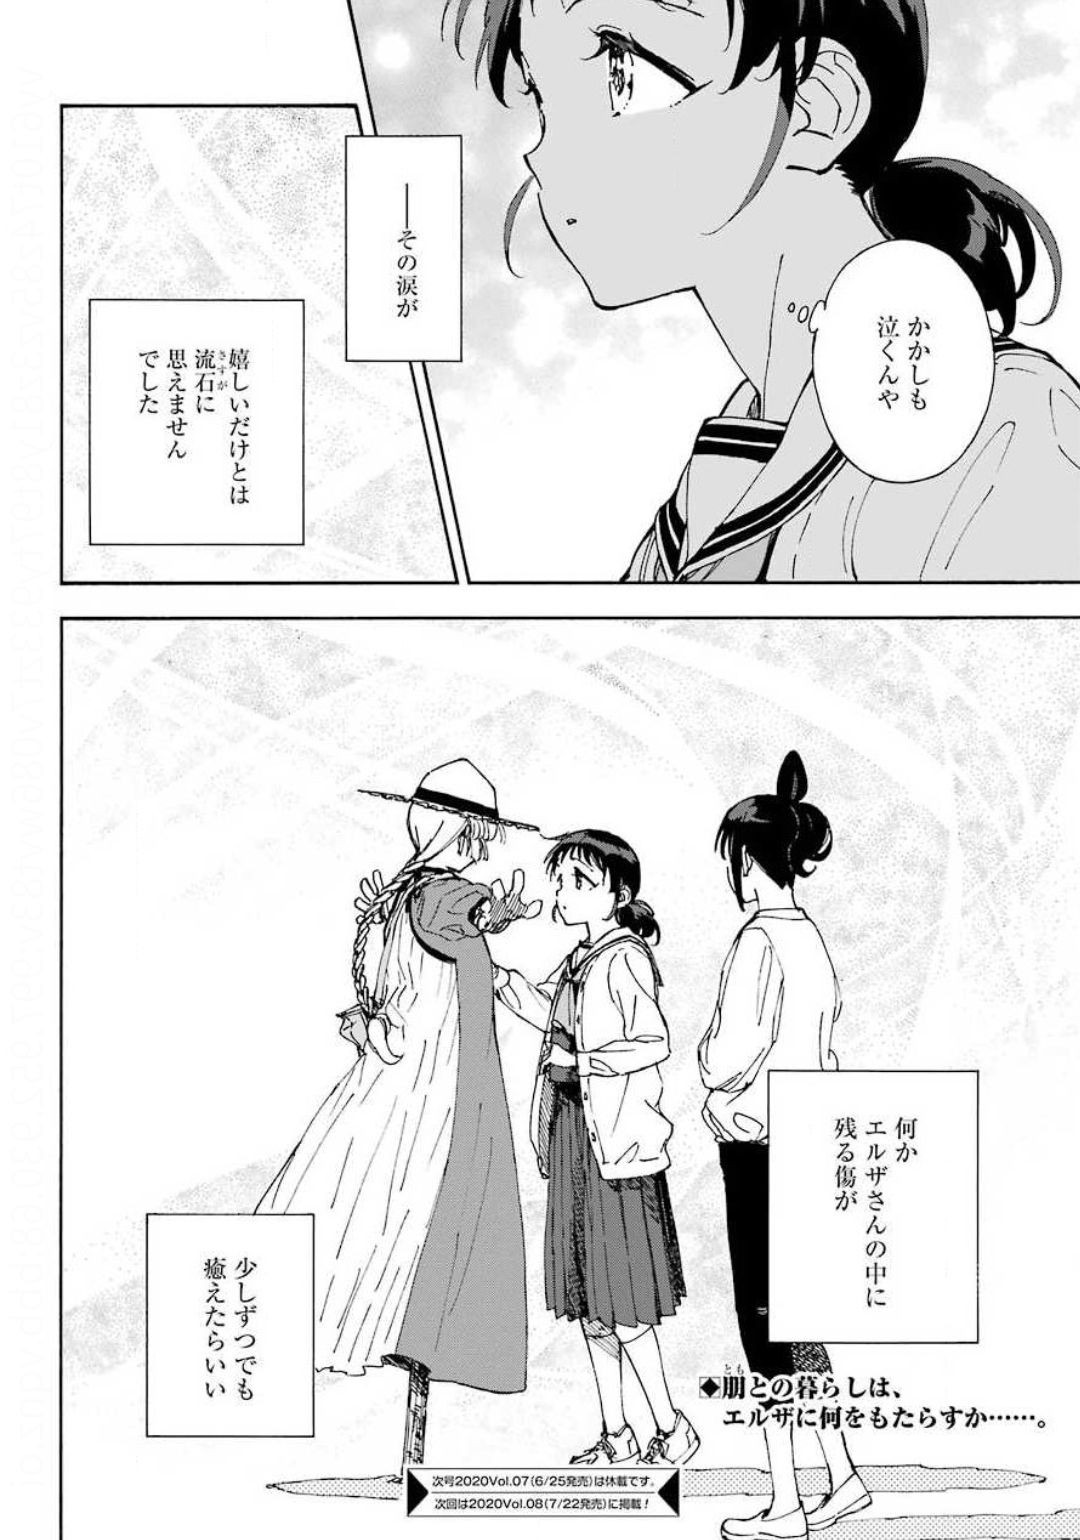 Hotomeku-kakashi - Chapter 04-2 - Page 29